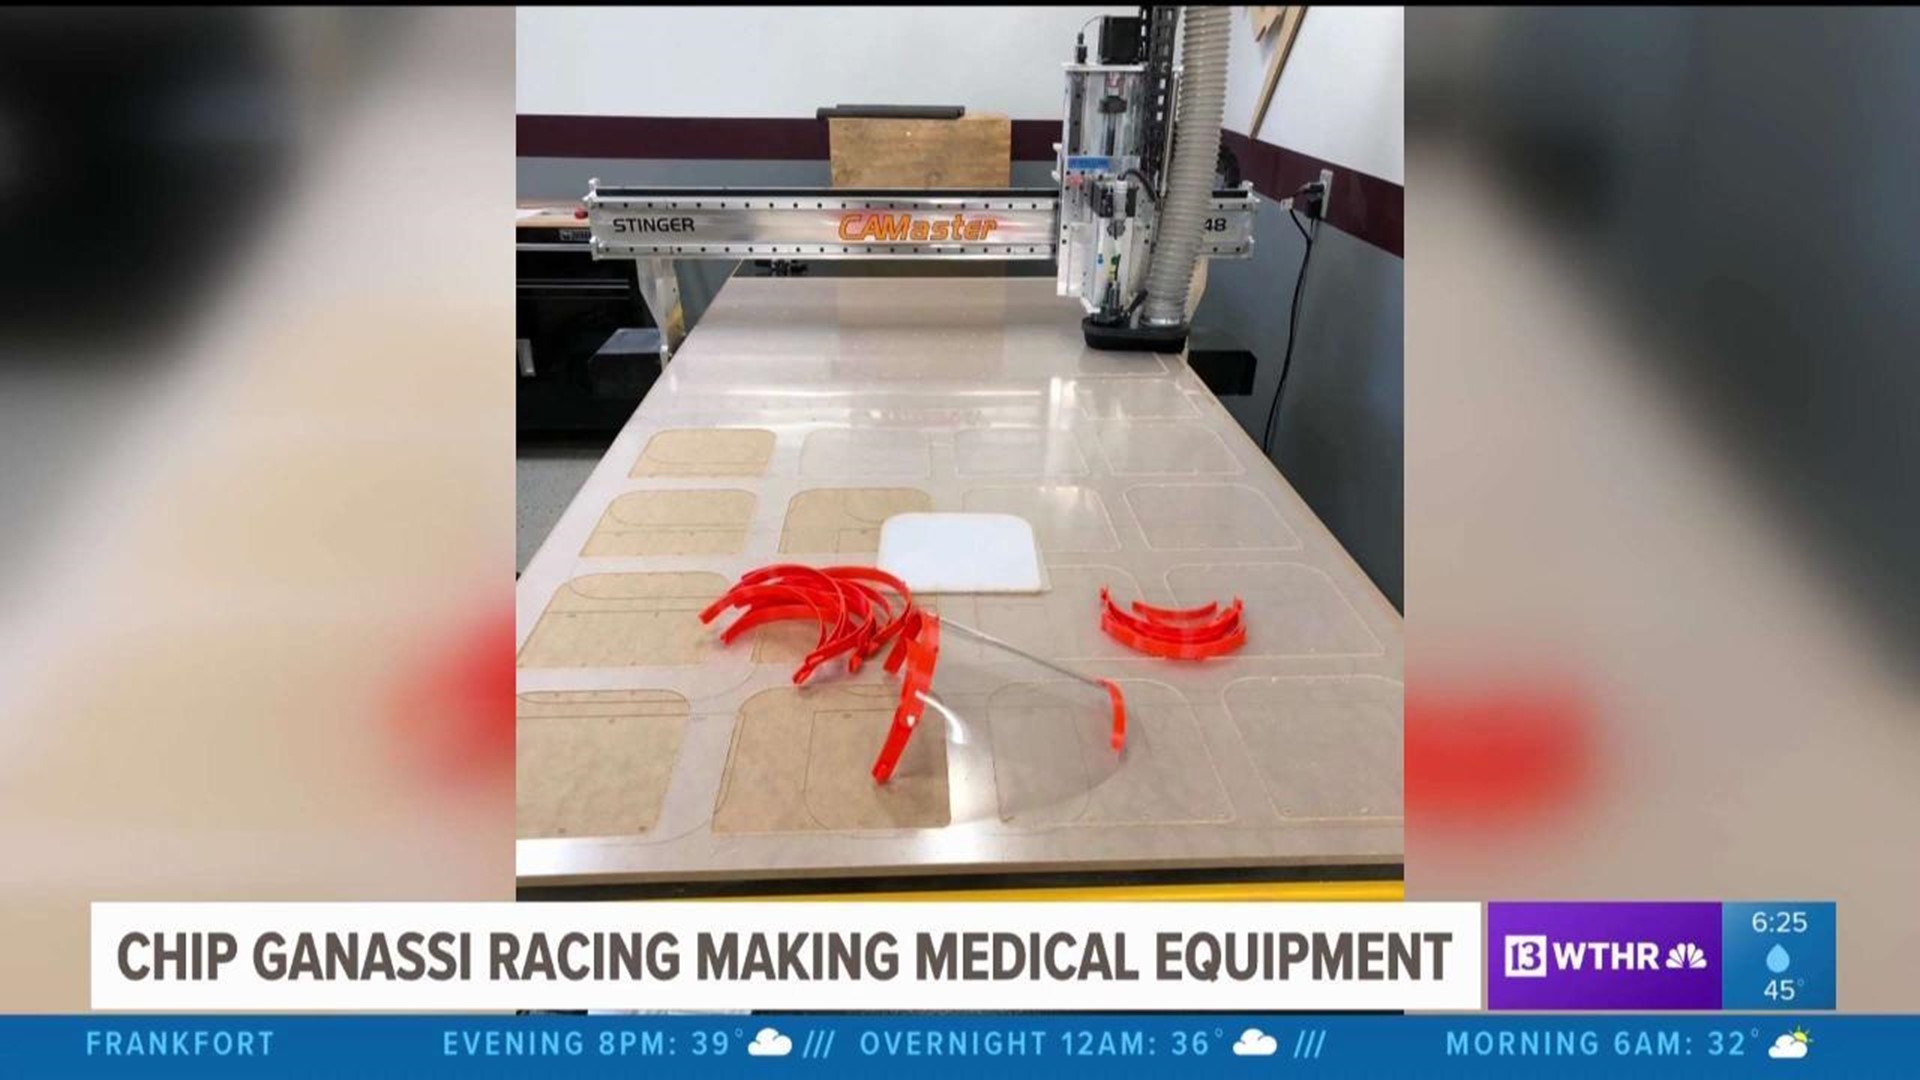 Chip Ganassi Racing making medical equipment